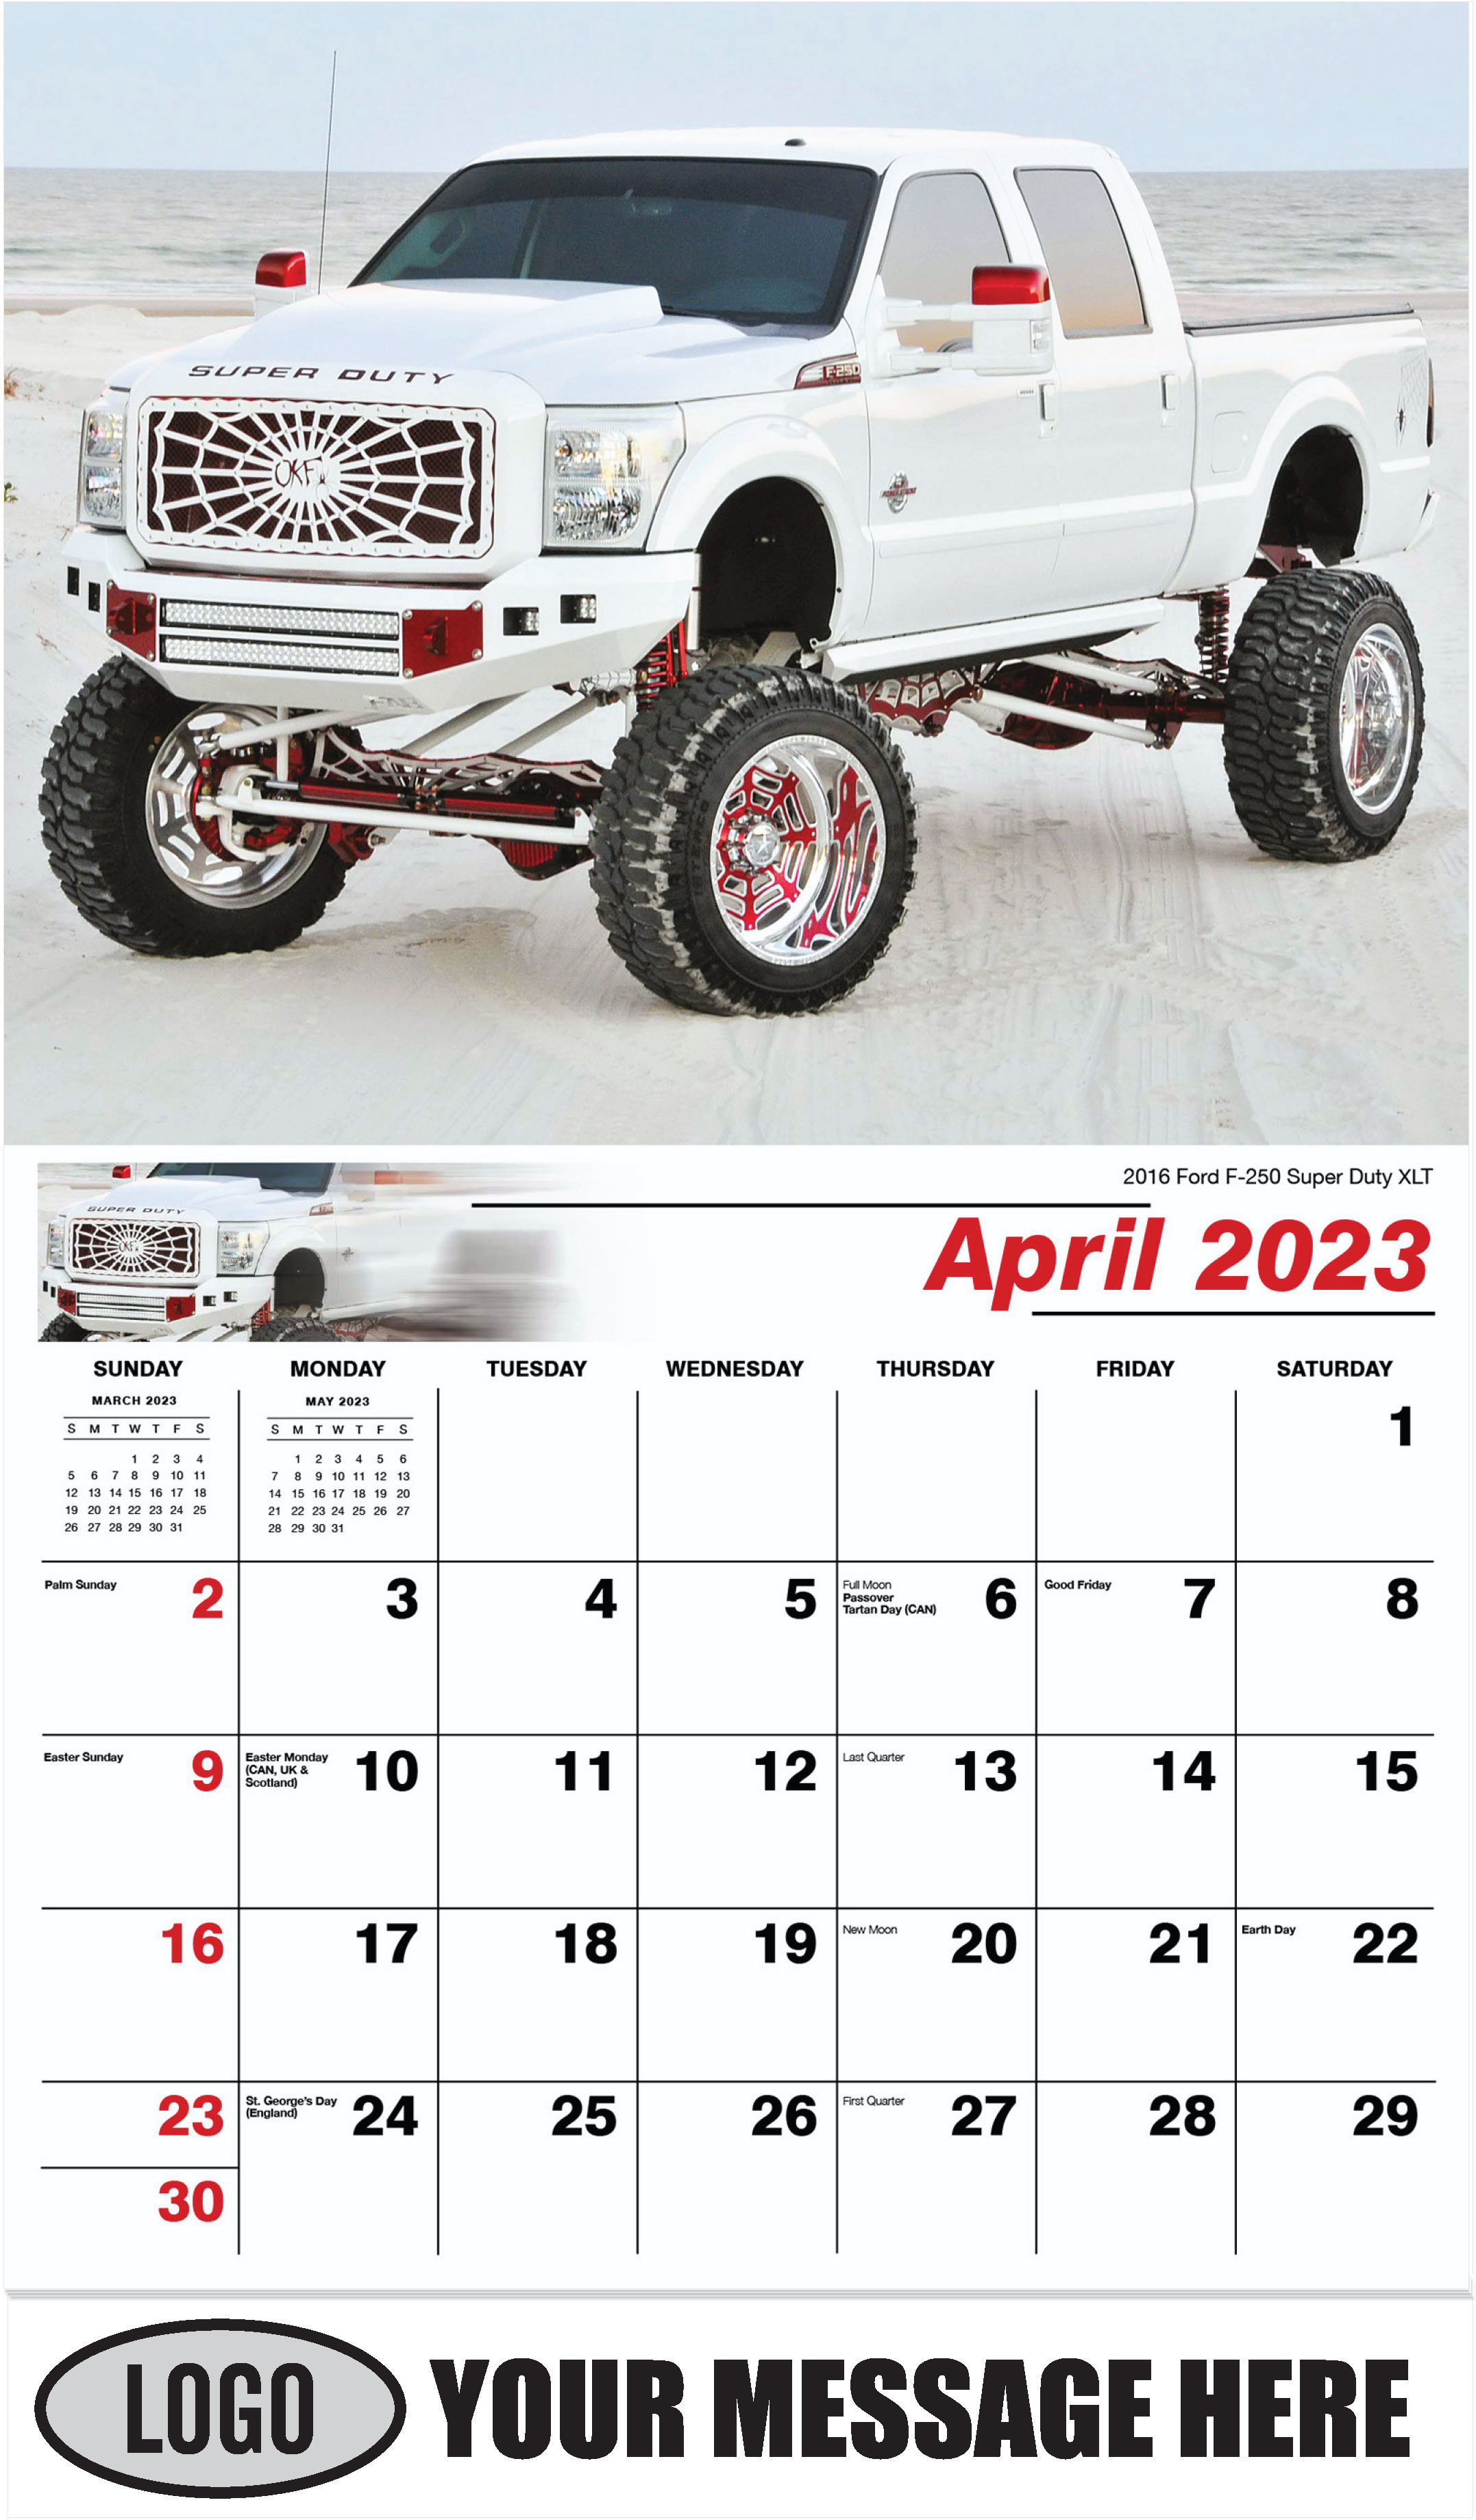 2016 Ford F-250 Super Duty XLT - April - Pumped Up Pickups 2023 Promotional Calendar